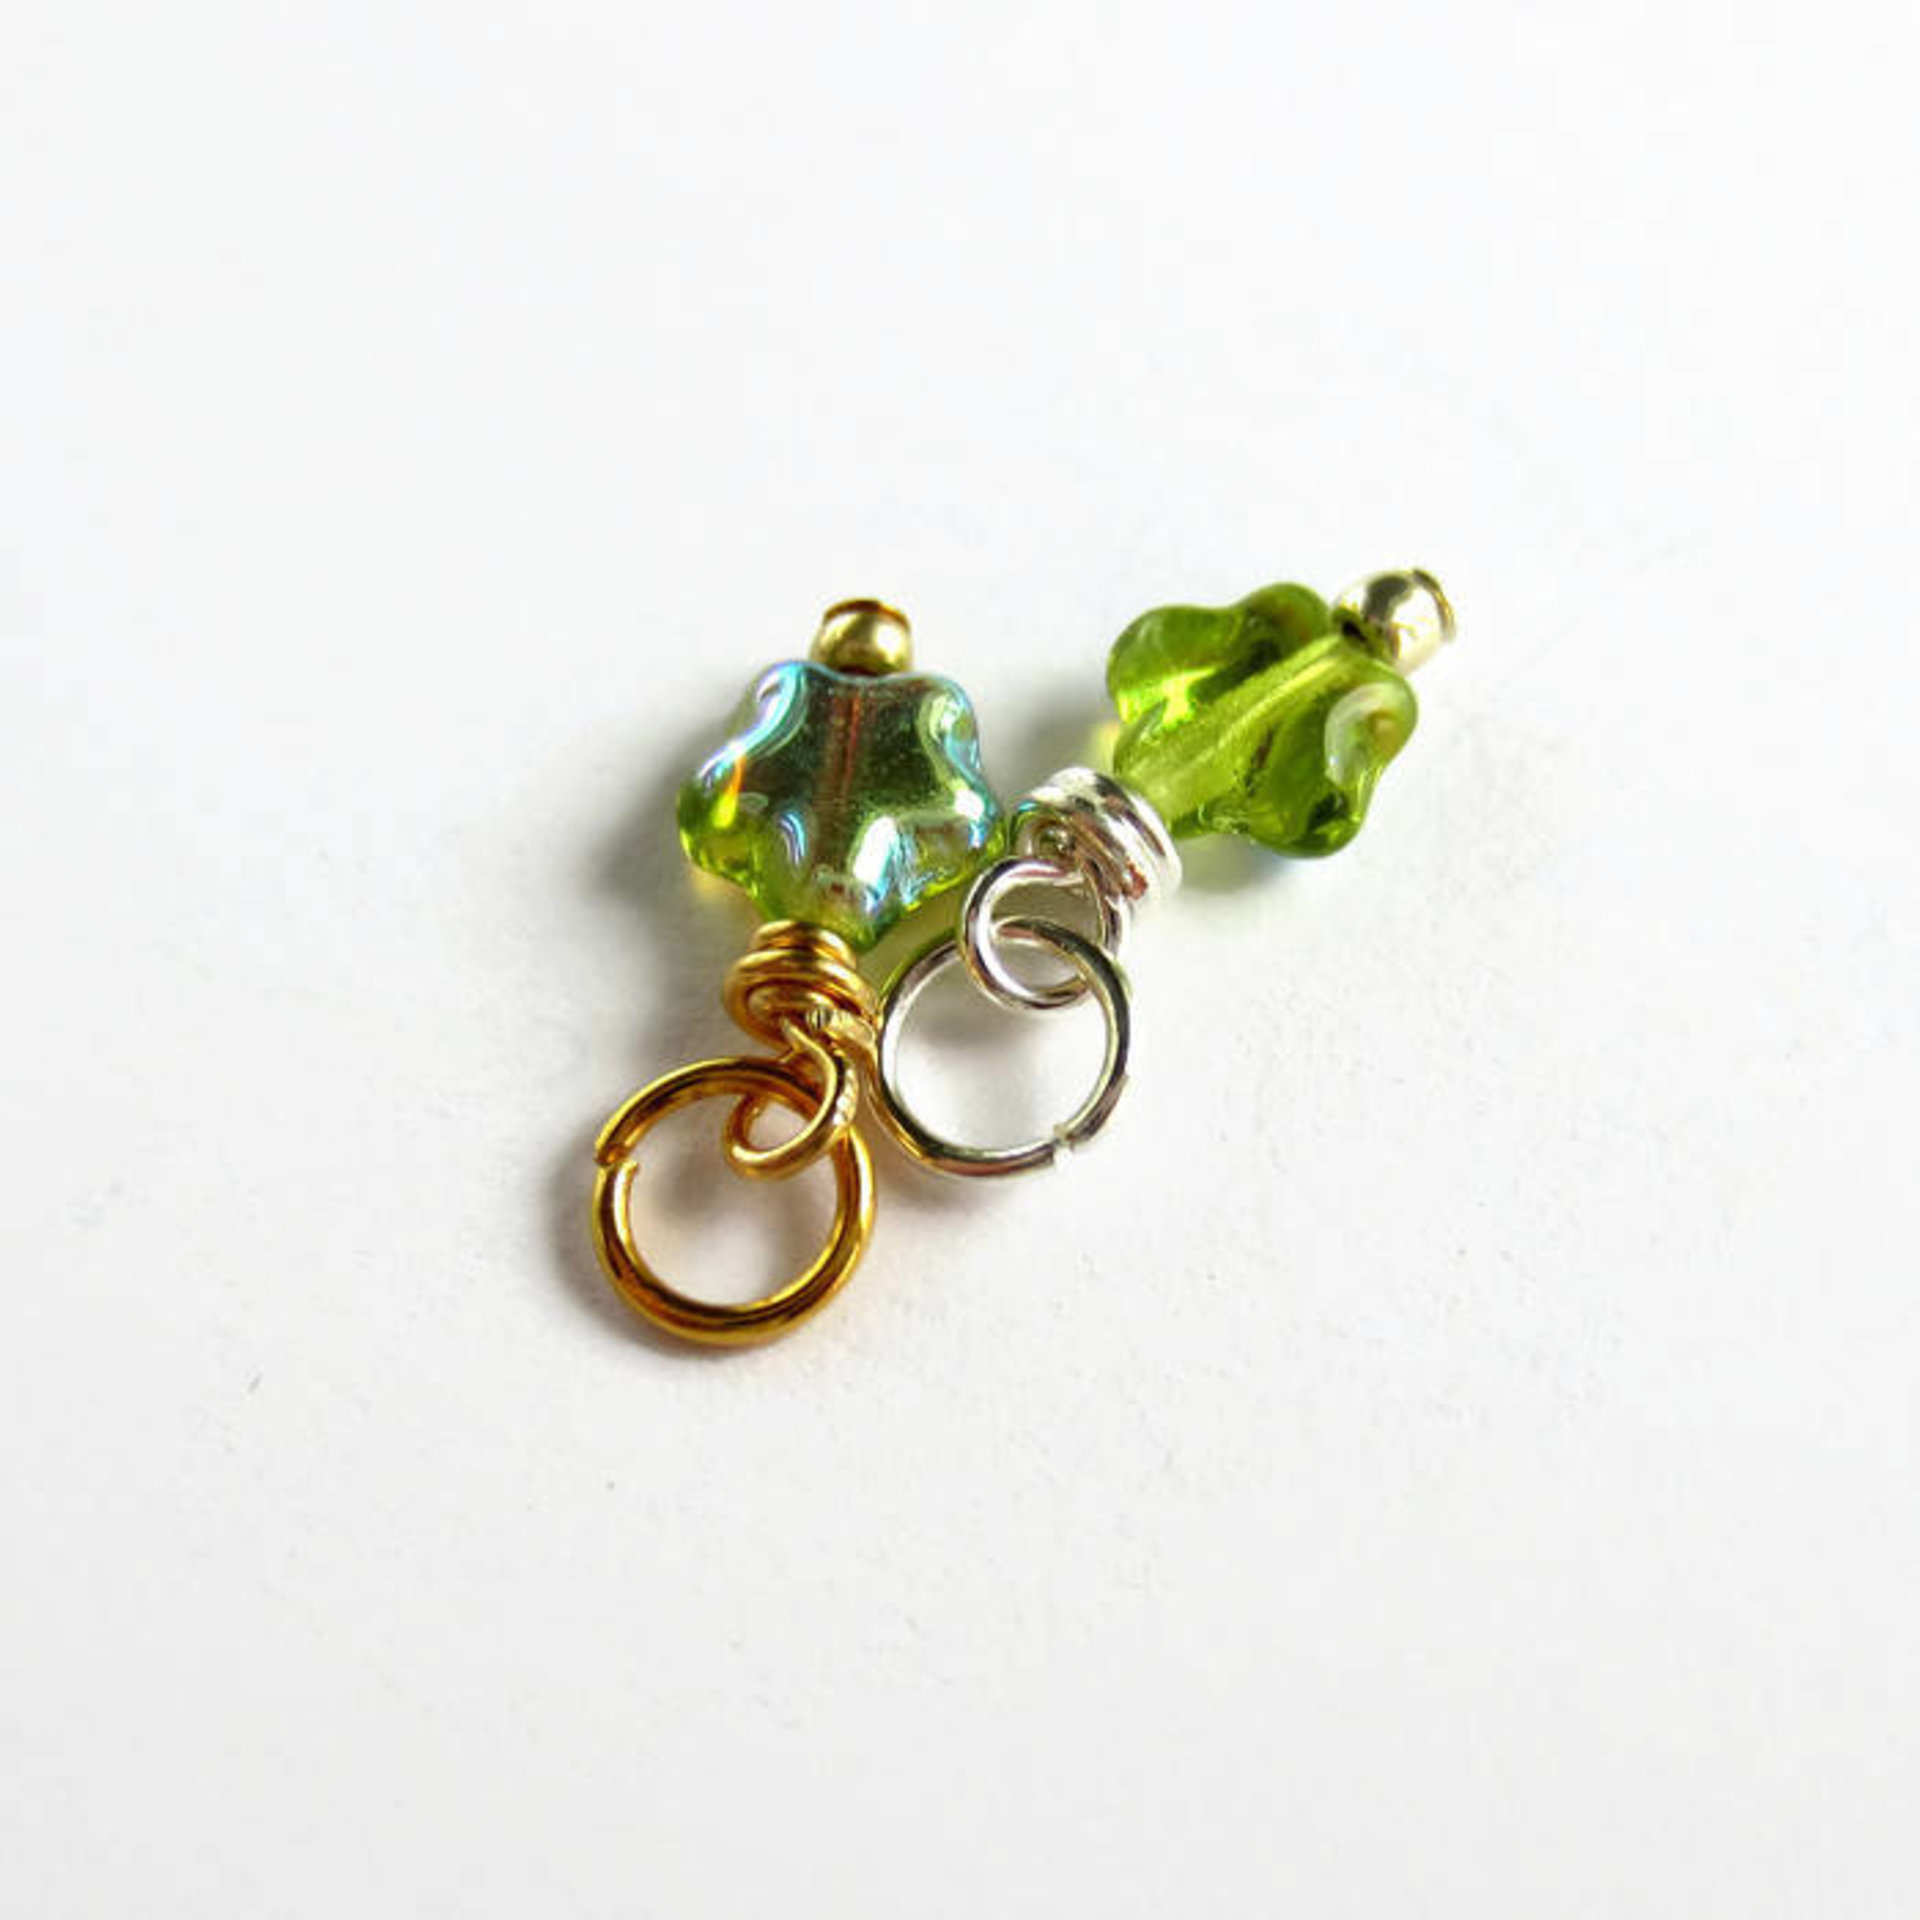 Tiny Green Czech Glass Star Charm ~ Handmade by The Tiny Tree Frog Jewellery